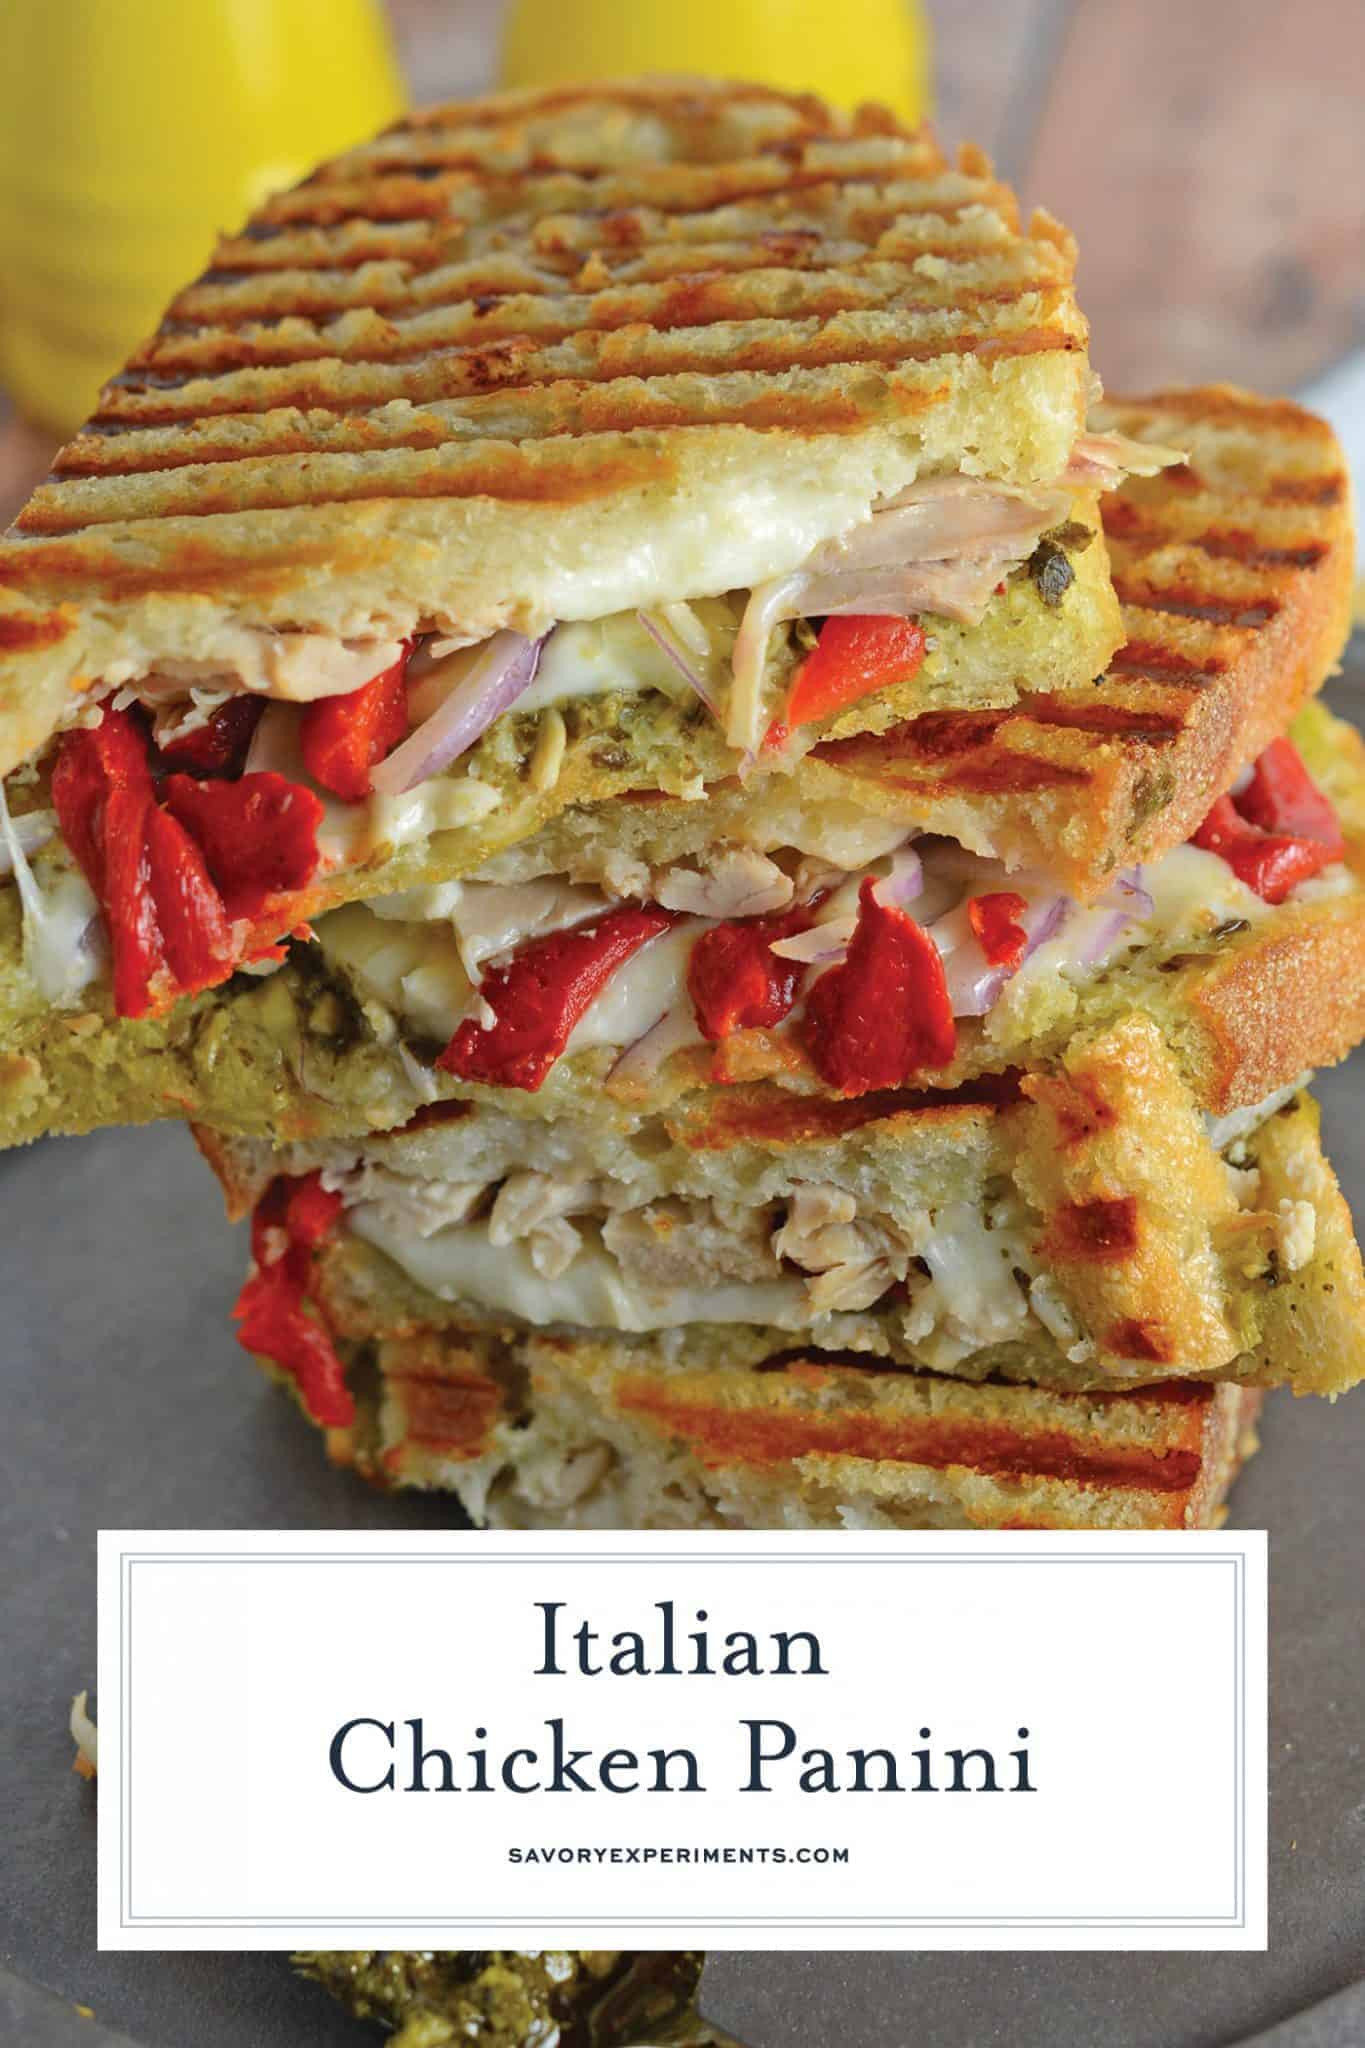 Best Panini Sandwich Recipes
 Italian Chicken Panini The Best Chicken Panini Sandwich